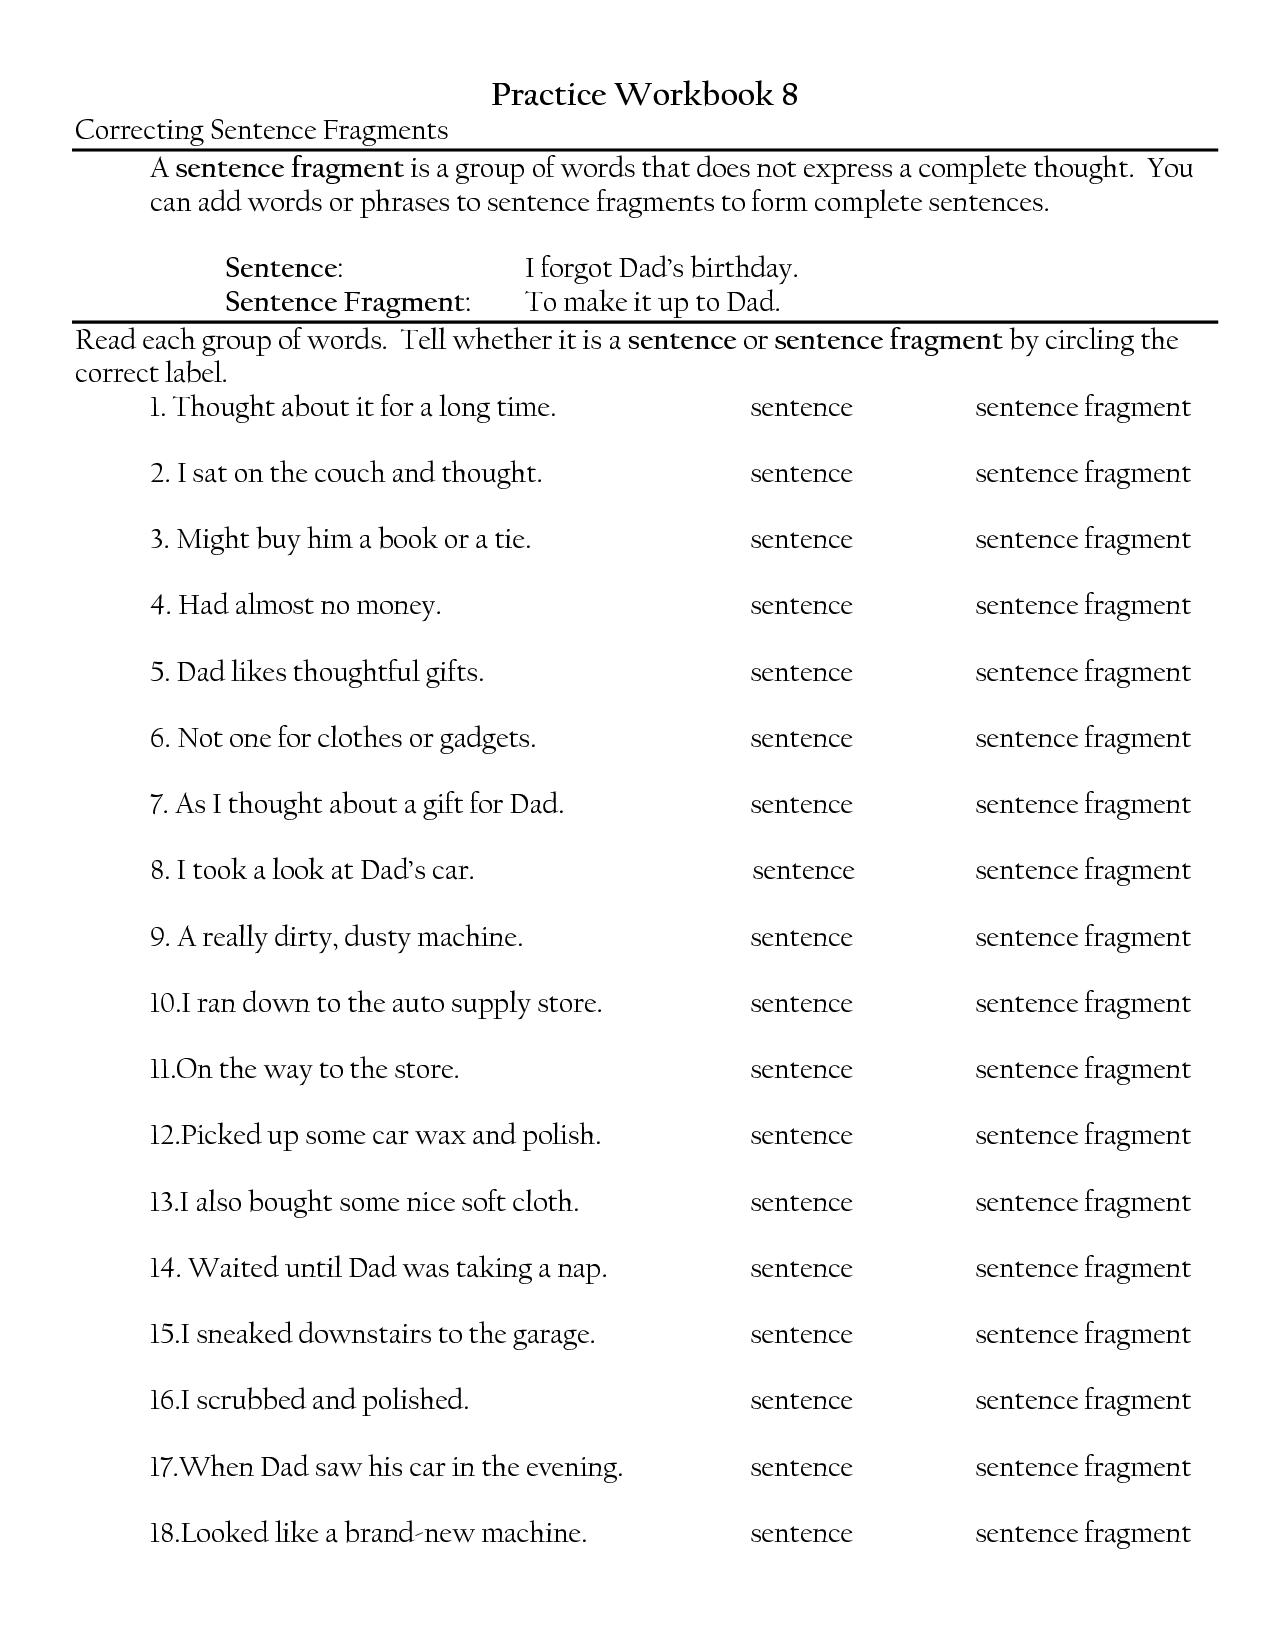 Sentences and Fragments Worksheets 3rd Grade